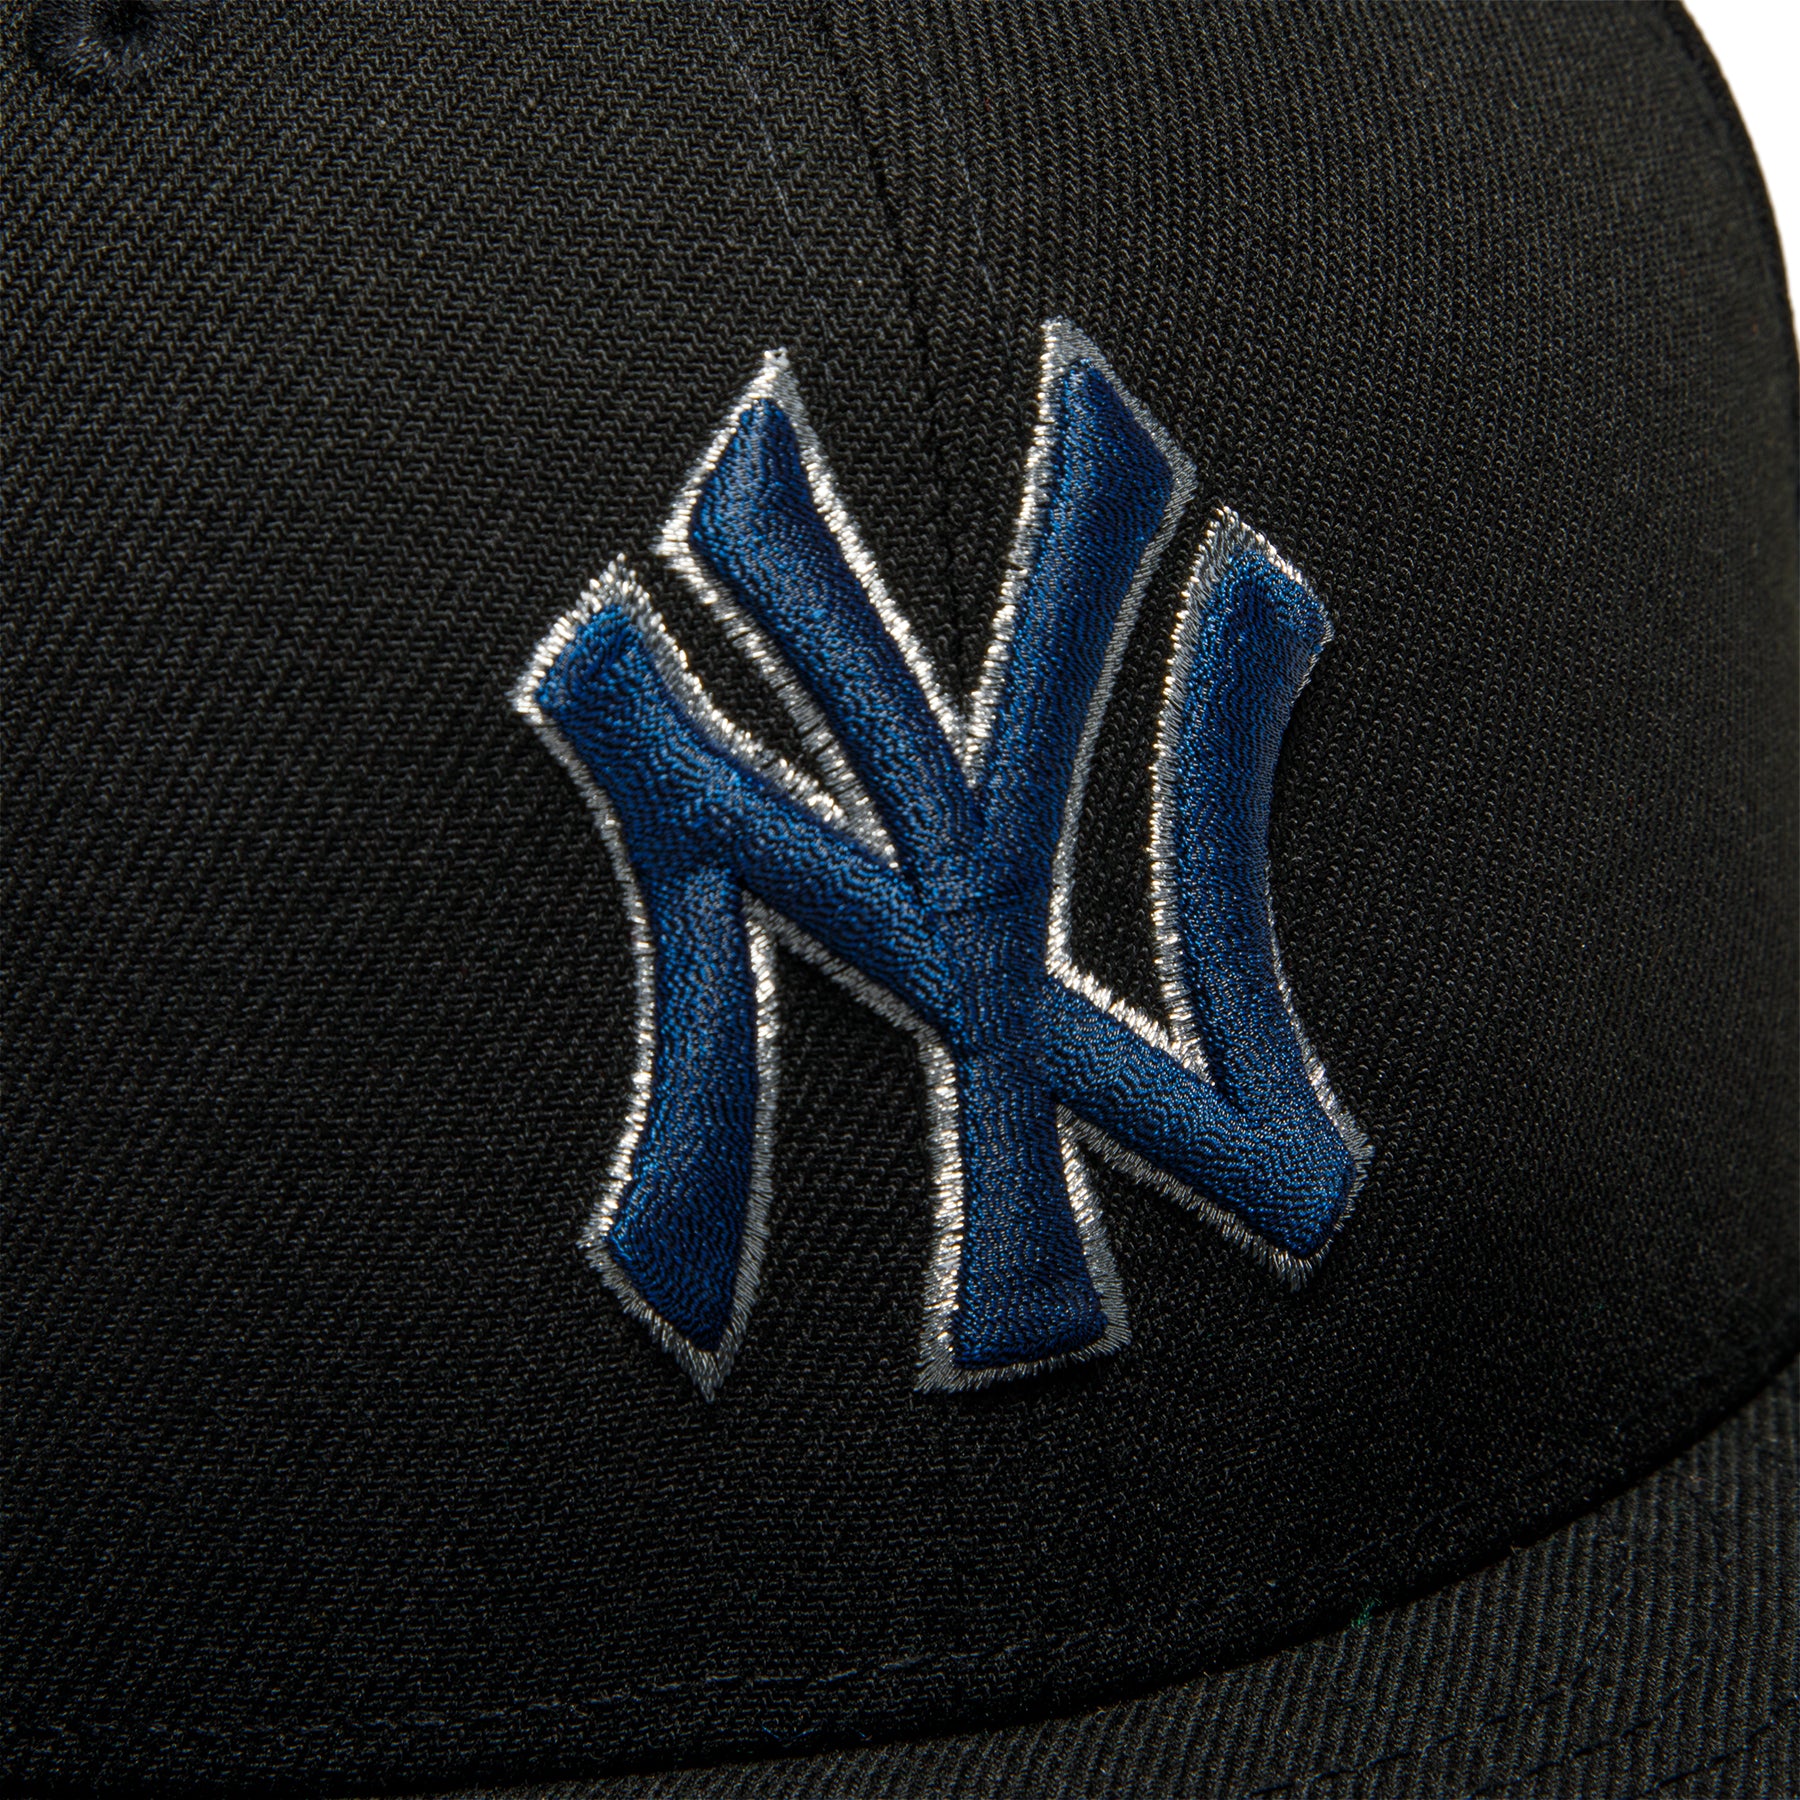 New Era MLB New York Yankees Metallic Logo 59FIFTY Fitted Hat (Black) 7 5/8